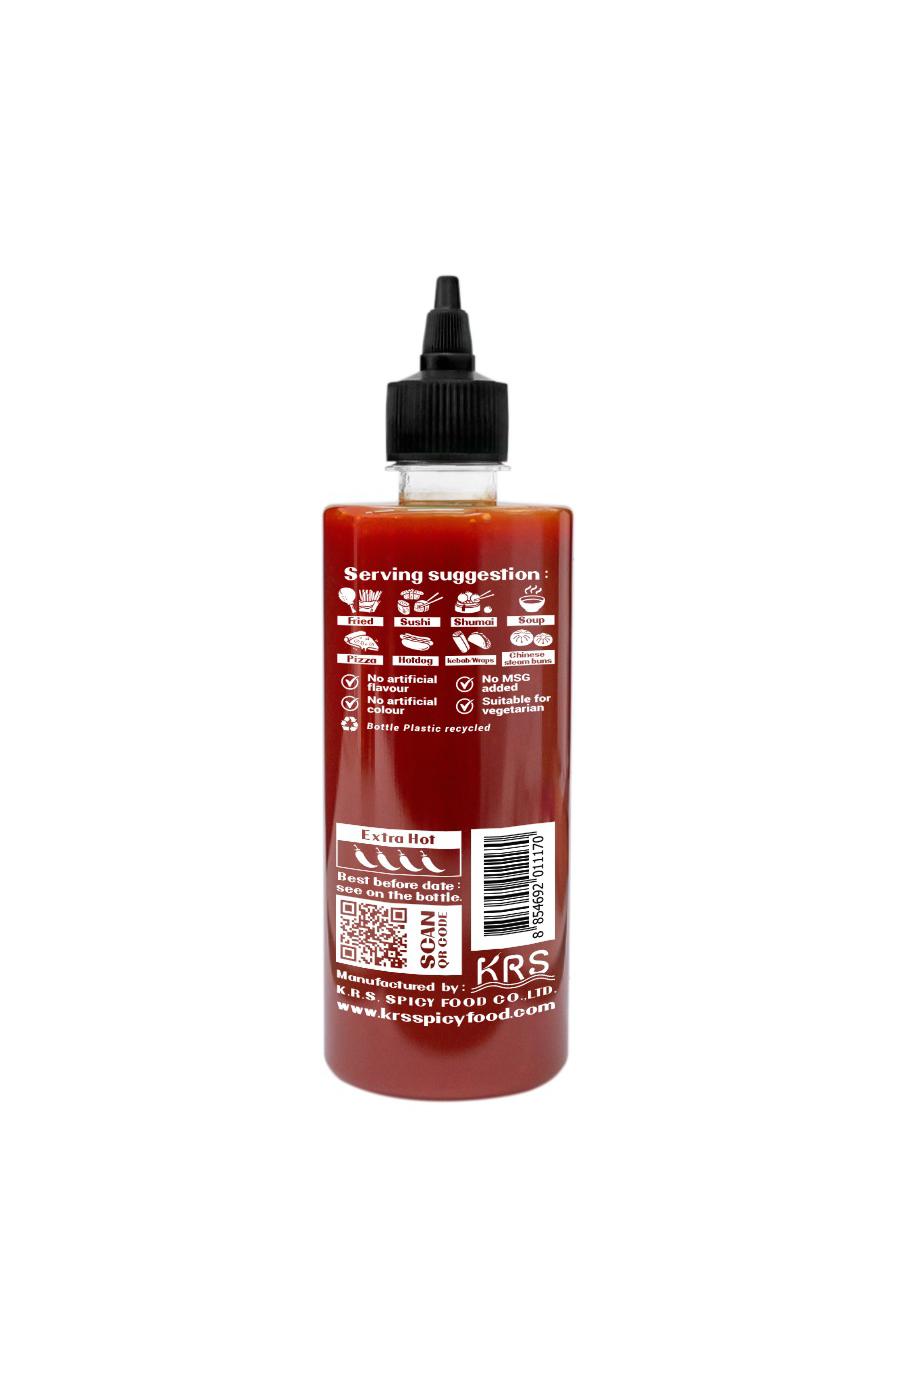 J Lek Sriracha Extra Hot Chili Sauce; image 2 of 3